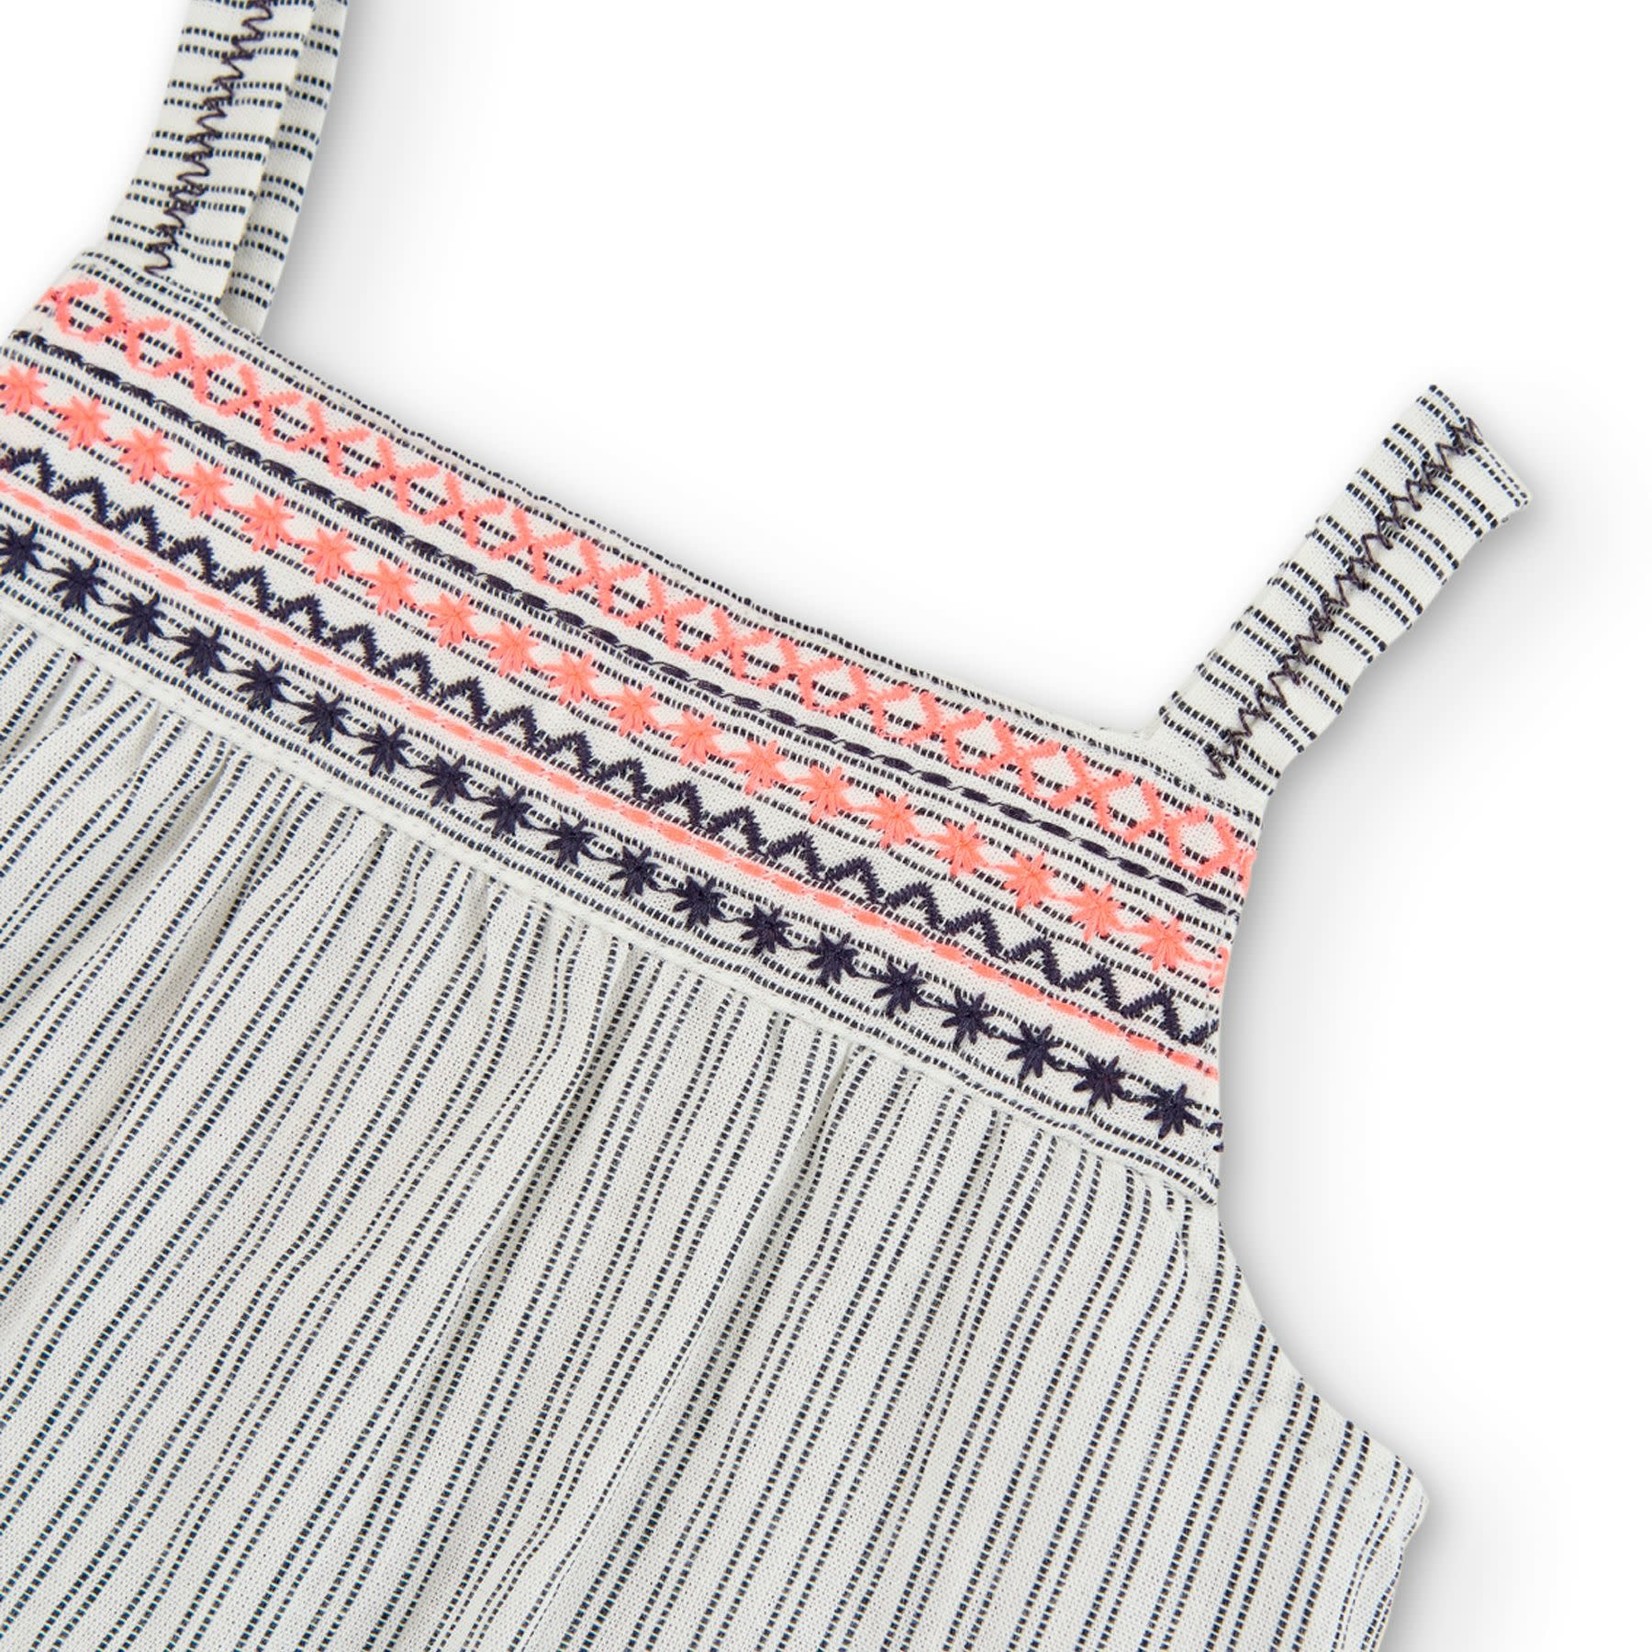 Boboli BOBOLI - Light white popelin sleeveless top with fine vertical charcoal stripes and embroidery